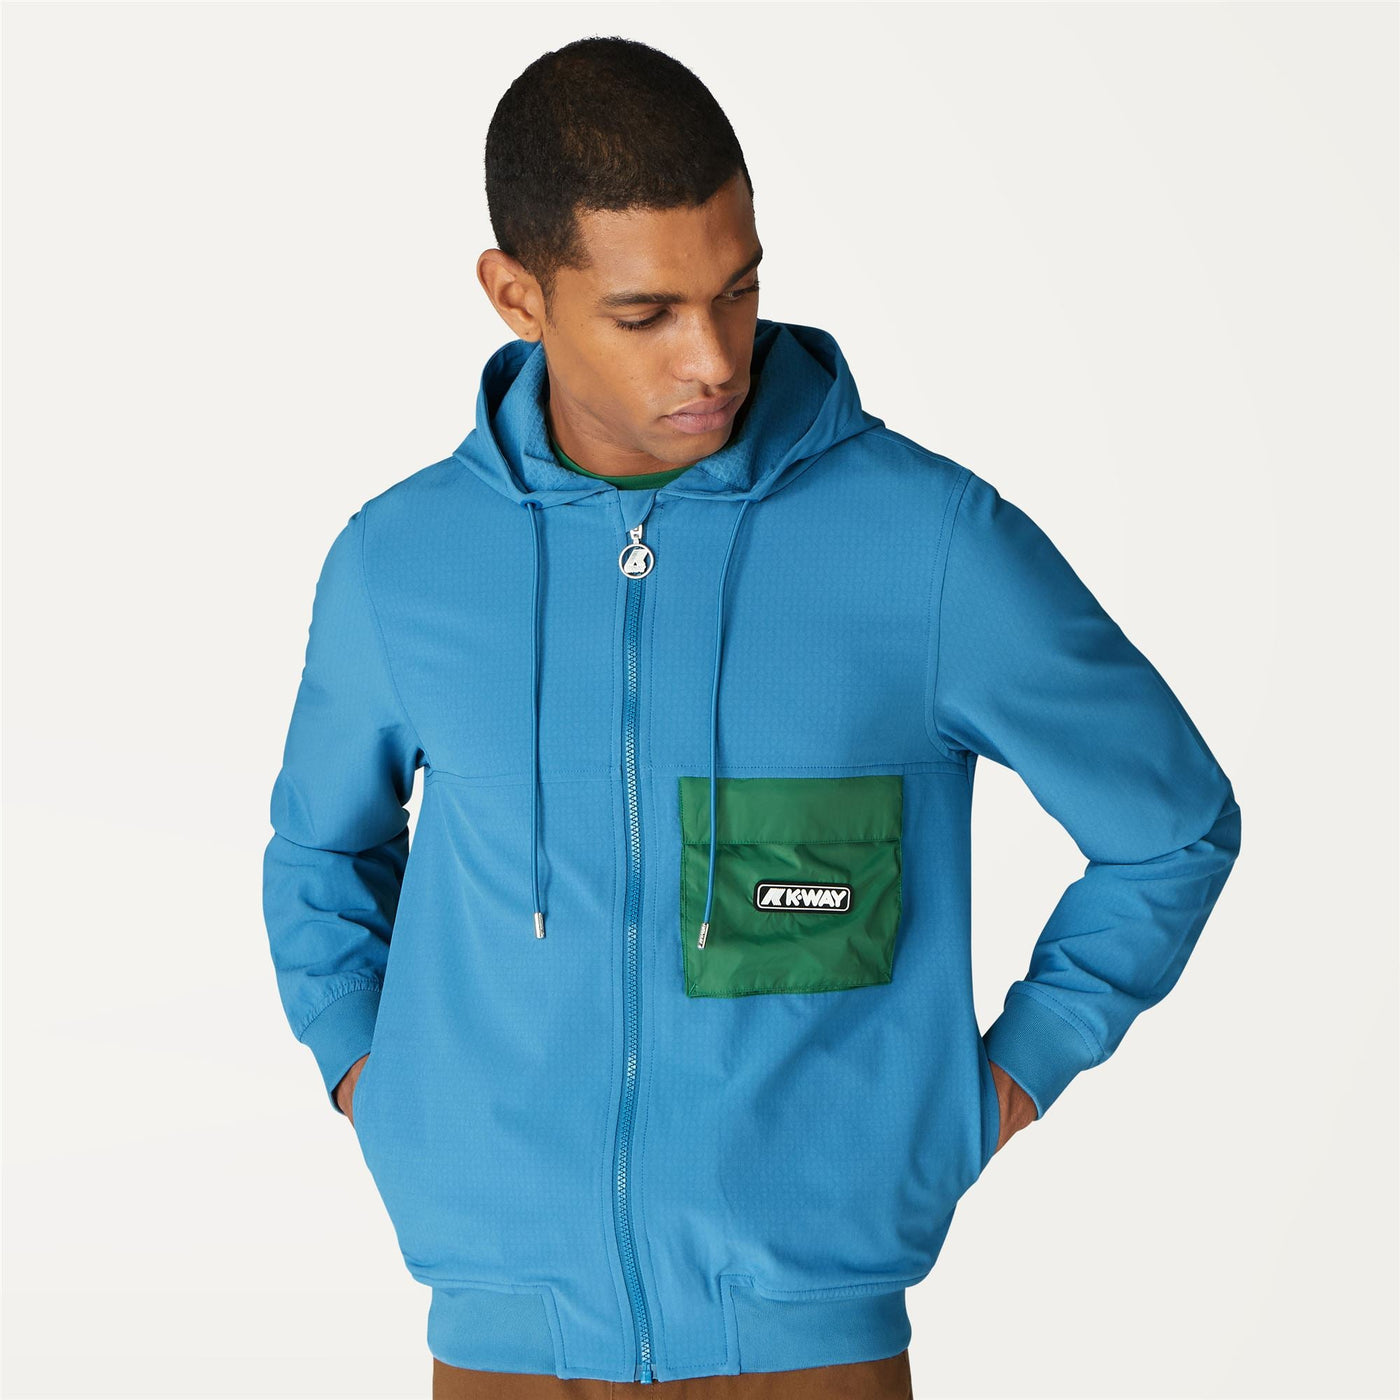 Fleece Unisex MIXMAKE LOICET Jacket Blue Turquoise-Green Dk | K-Way Detail Double				